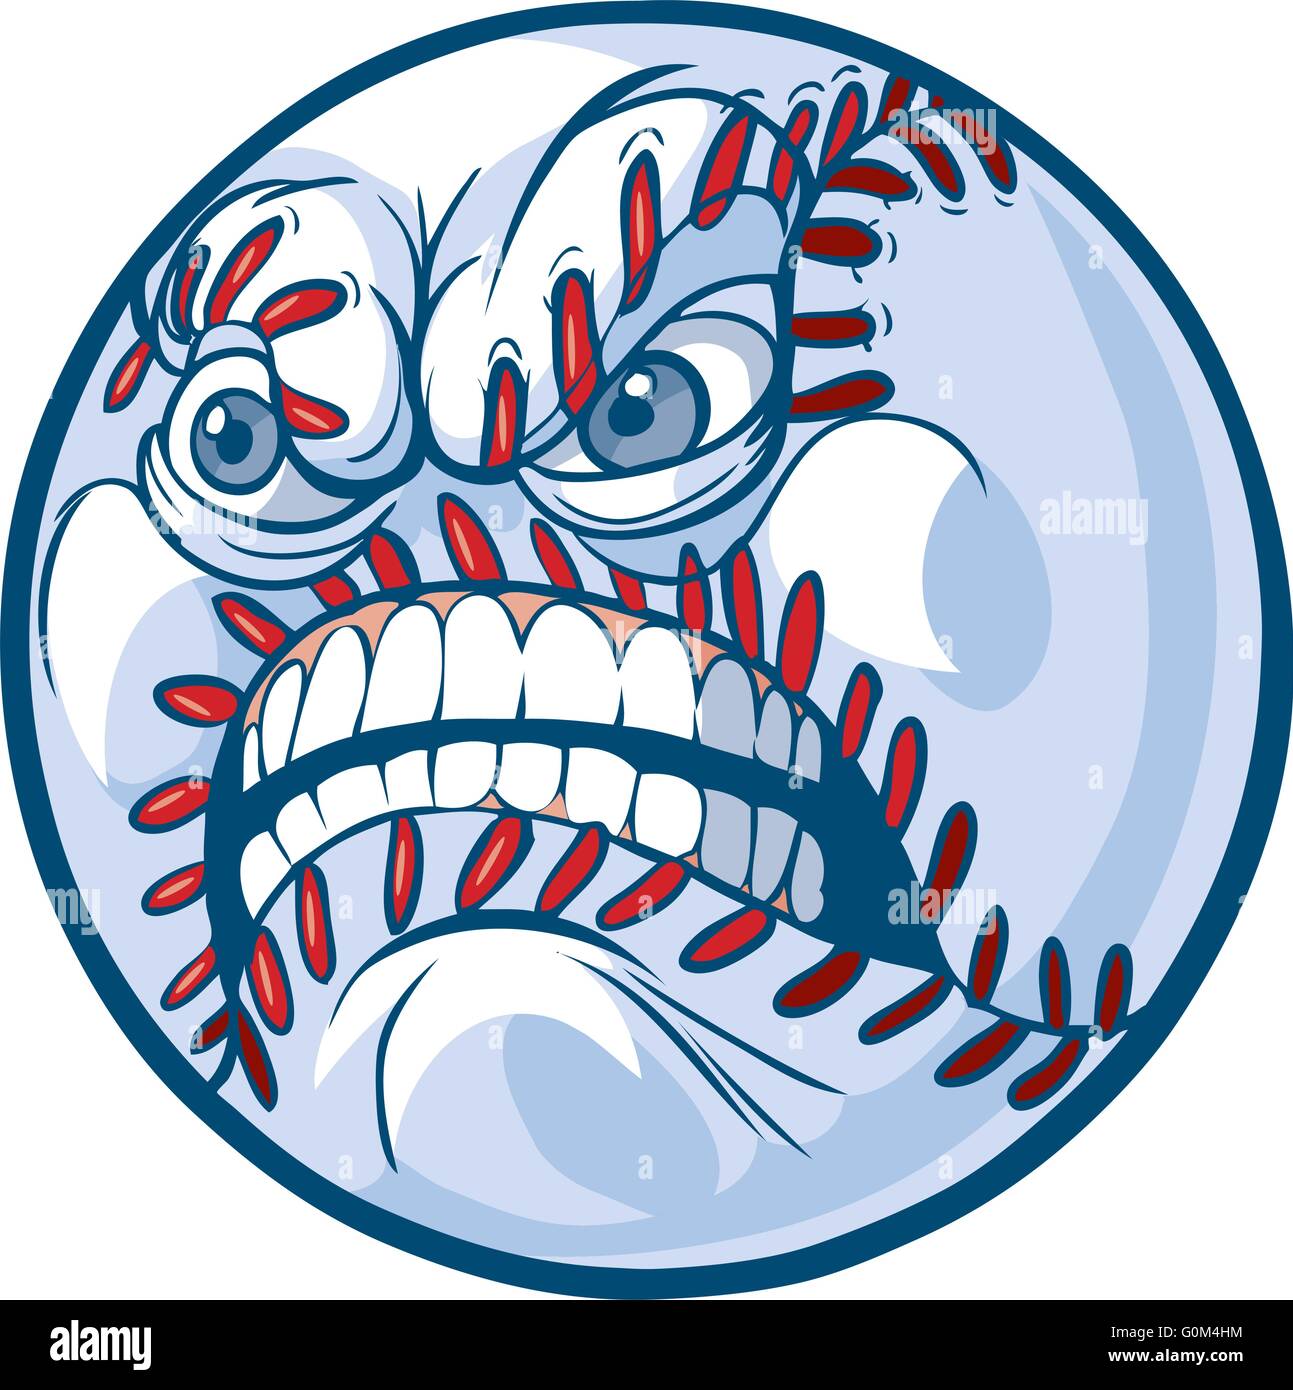 Vector Cartoon Clip Art Illustration of a baseball or softball with an angry face. Stock Vector